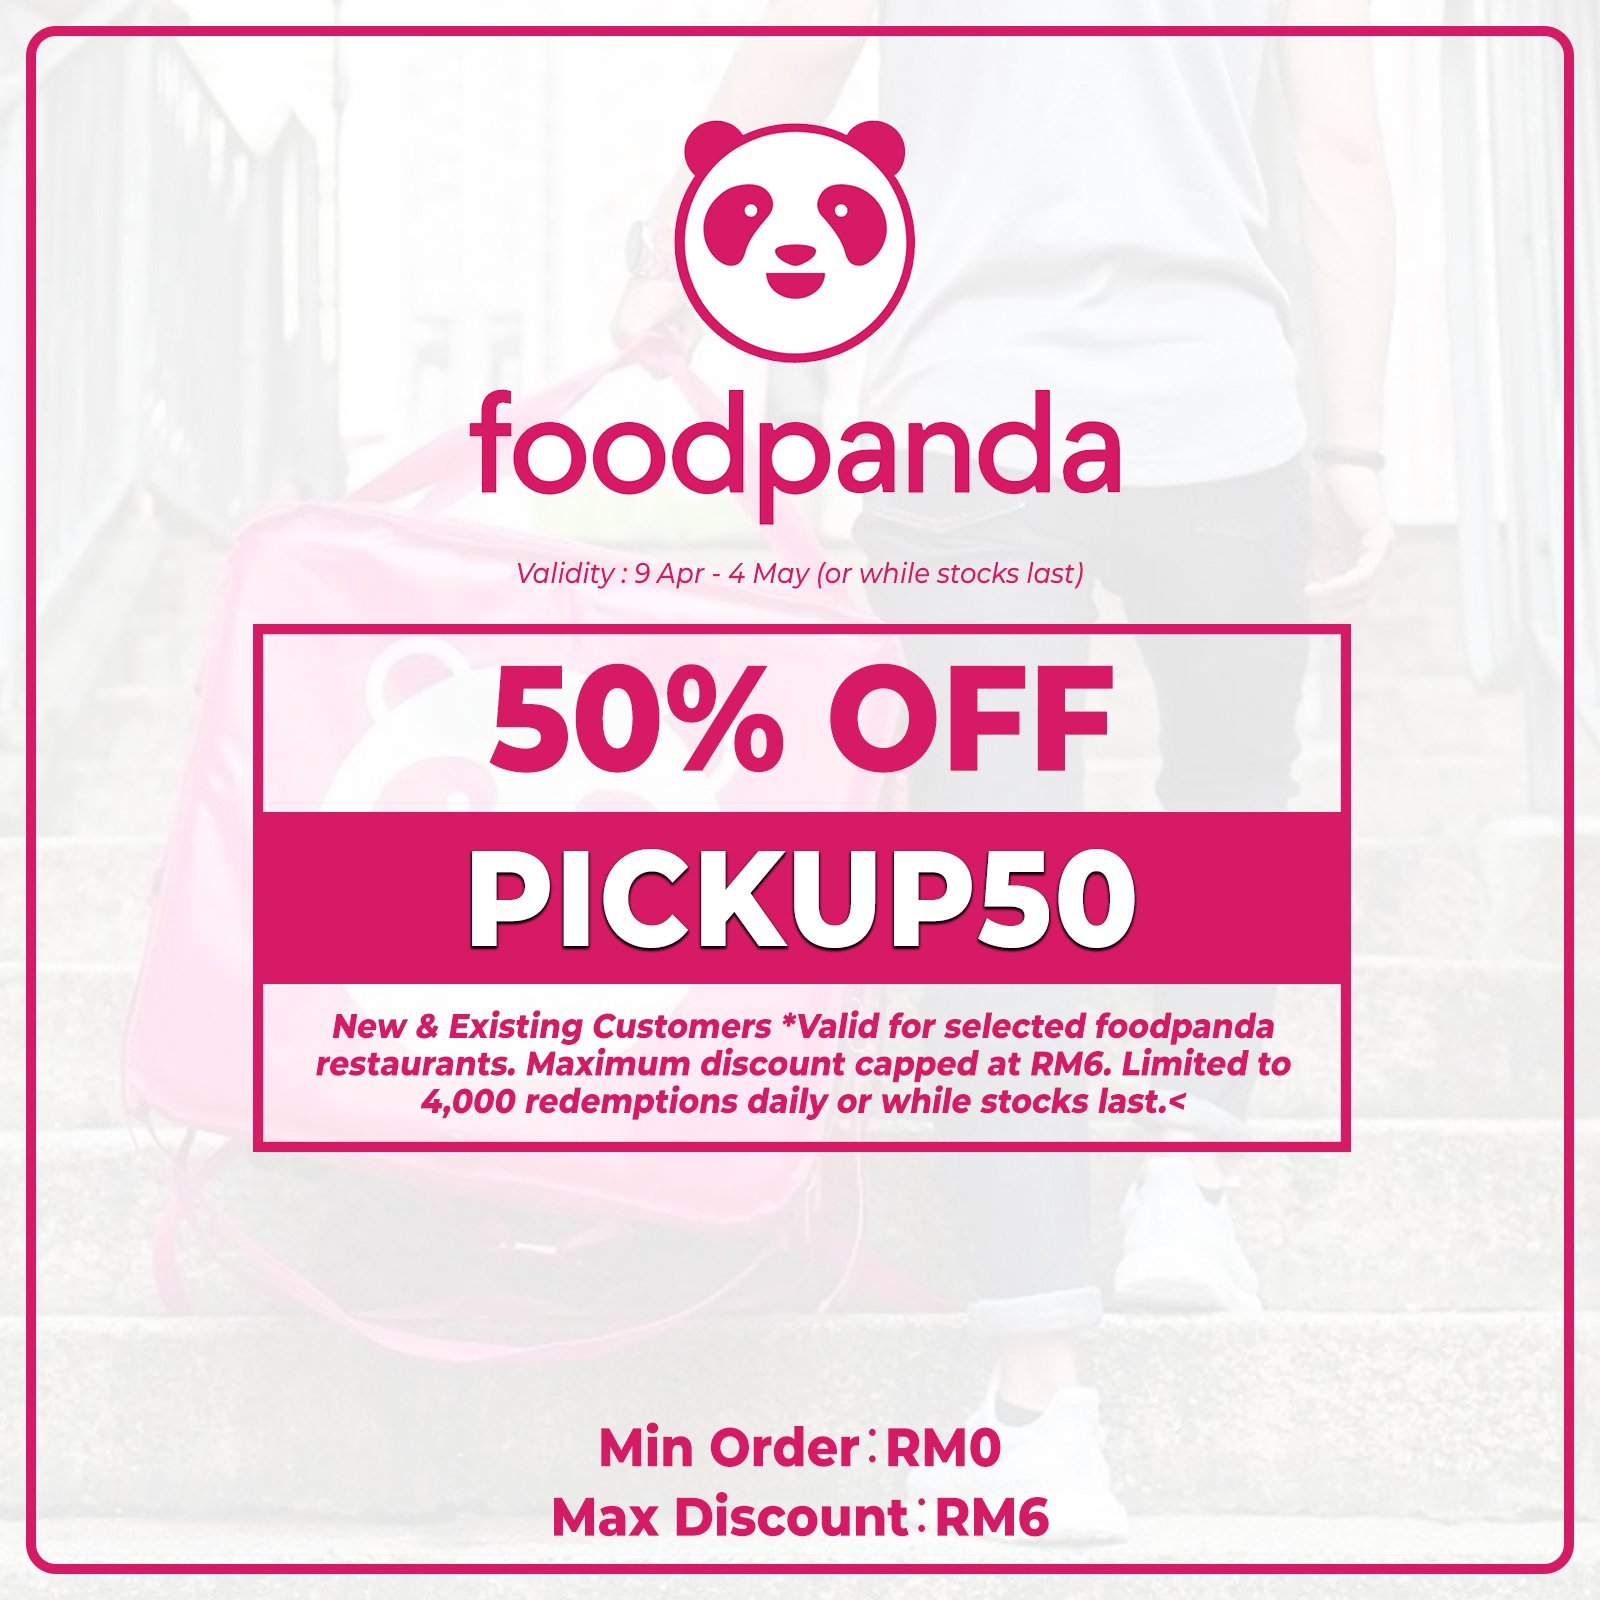 Food panda promo may 2021